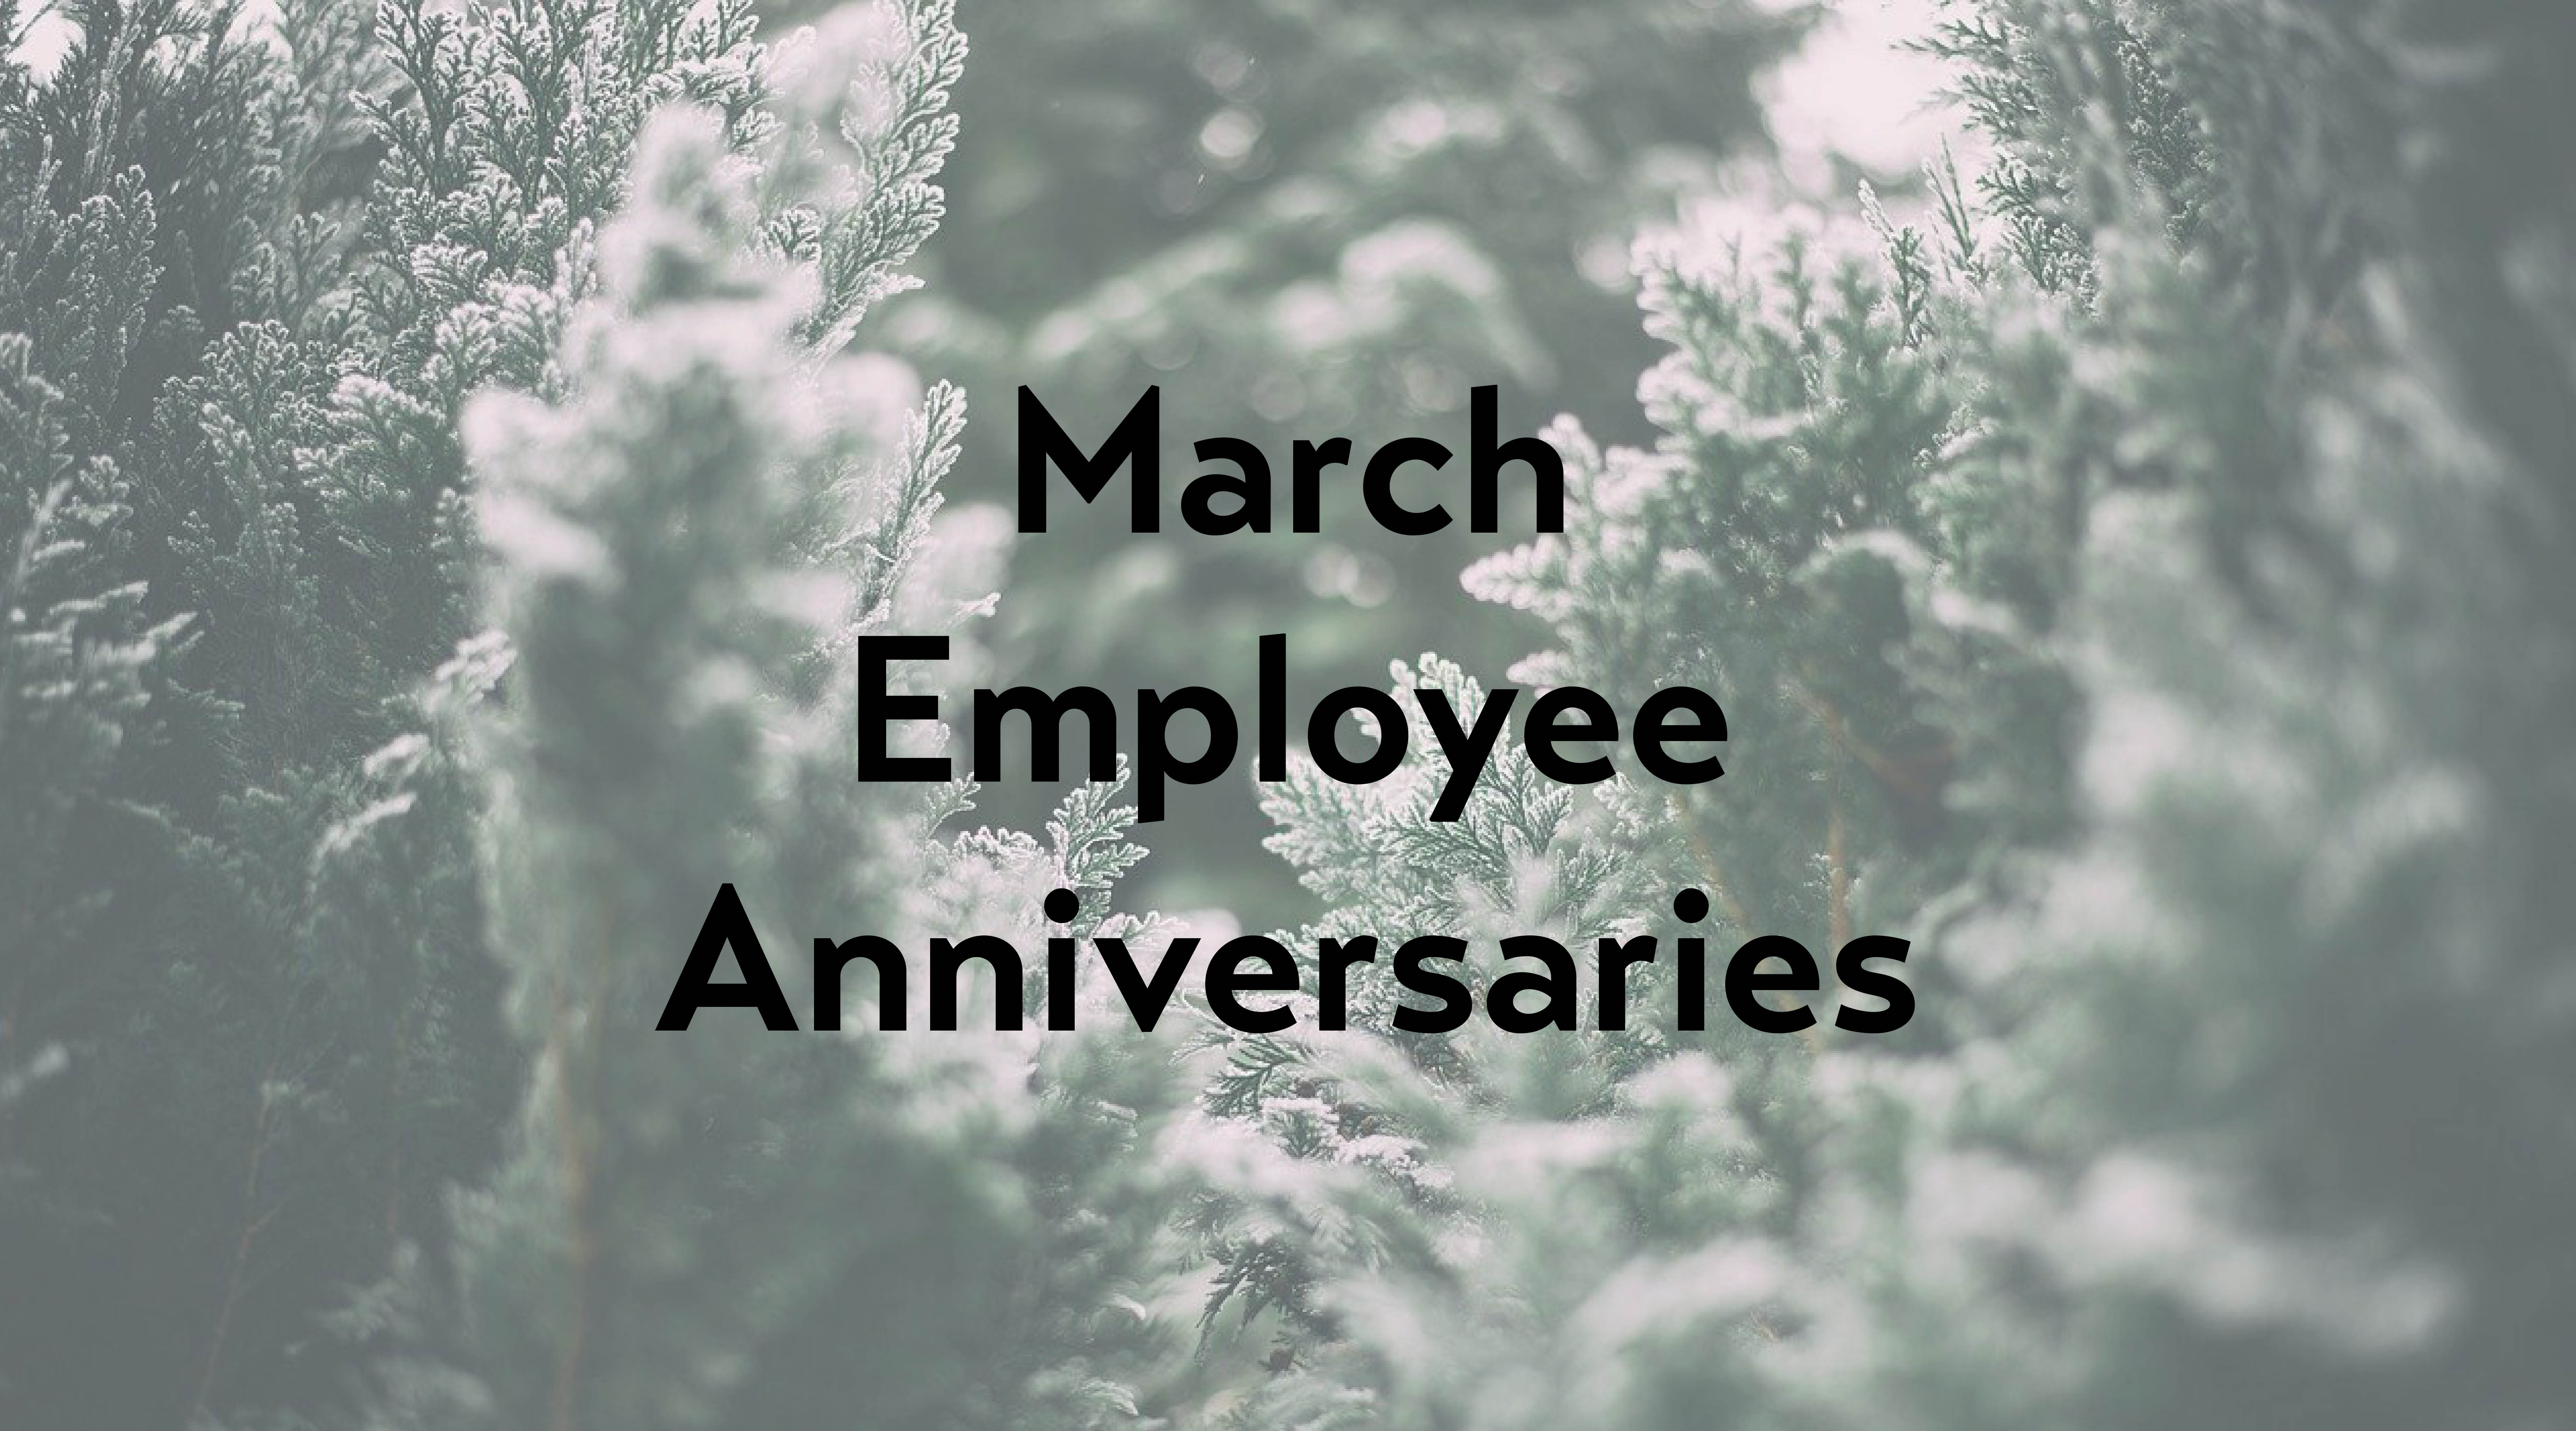 March Employee Anniversaries